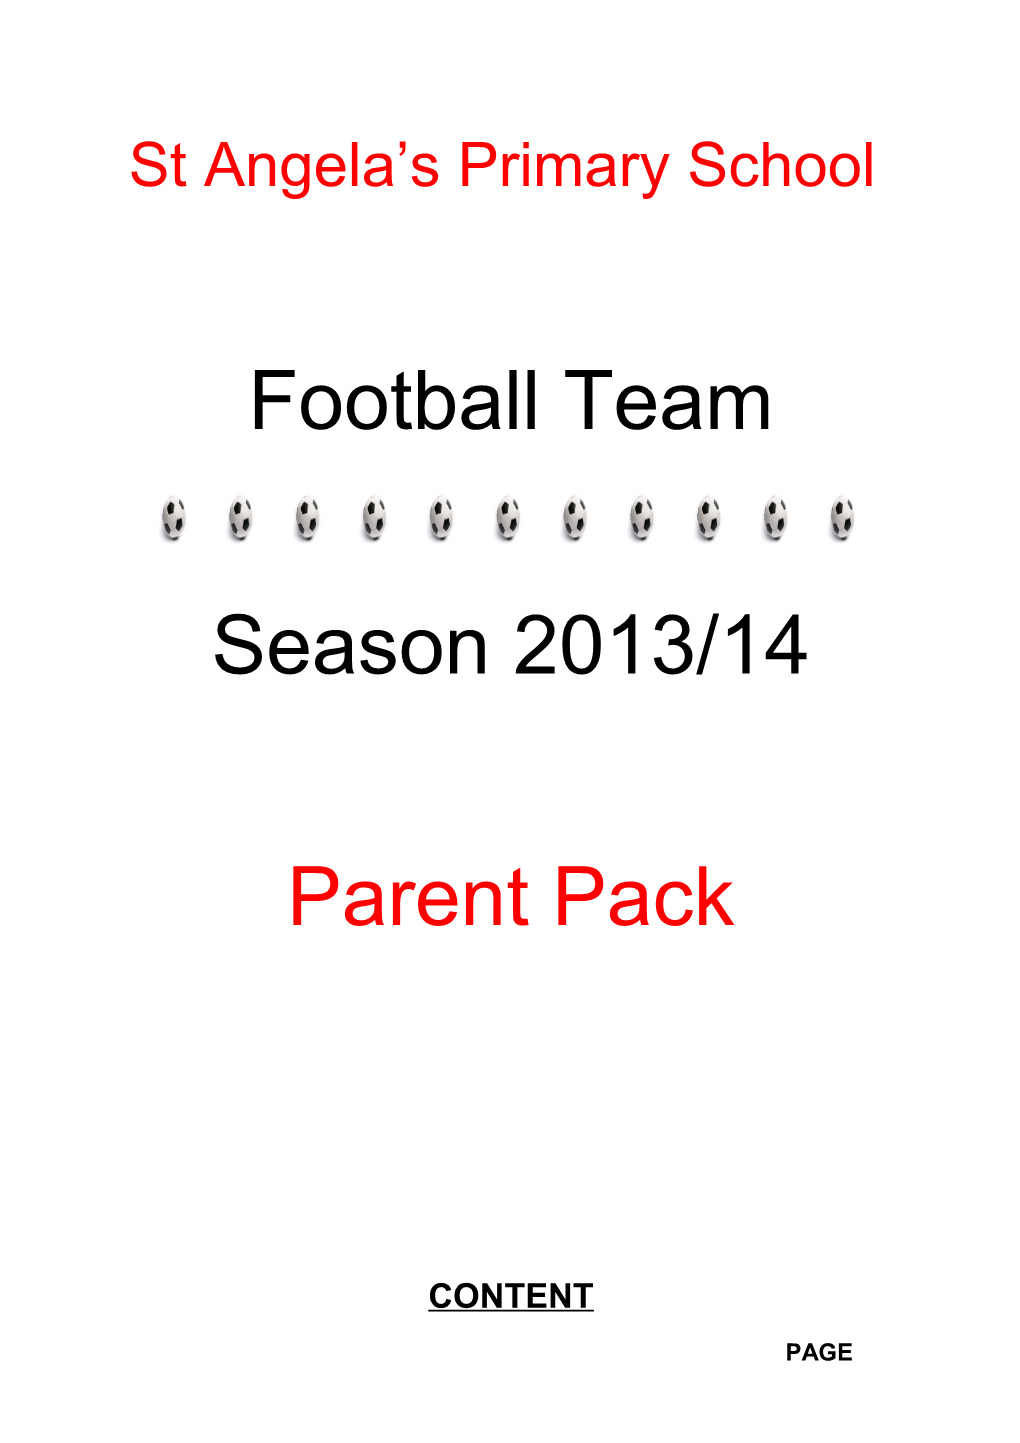 Parent Pack - Football Team